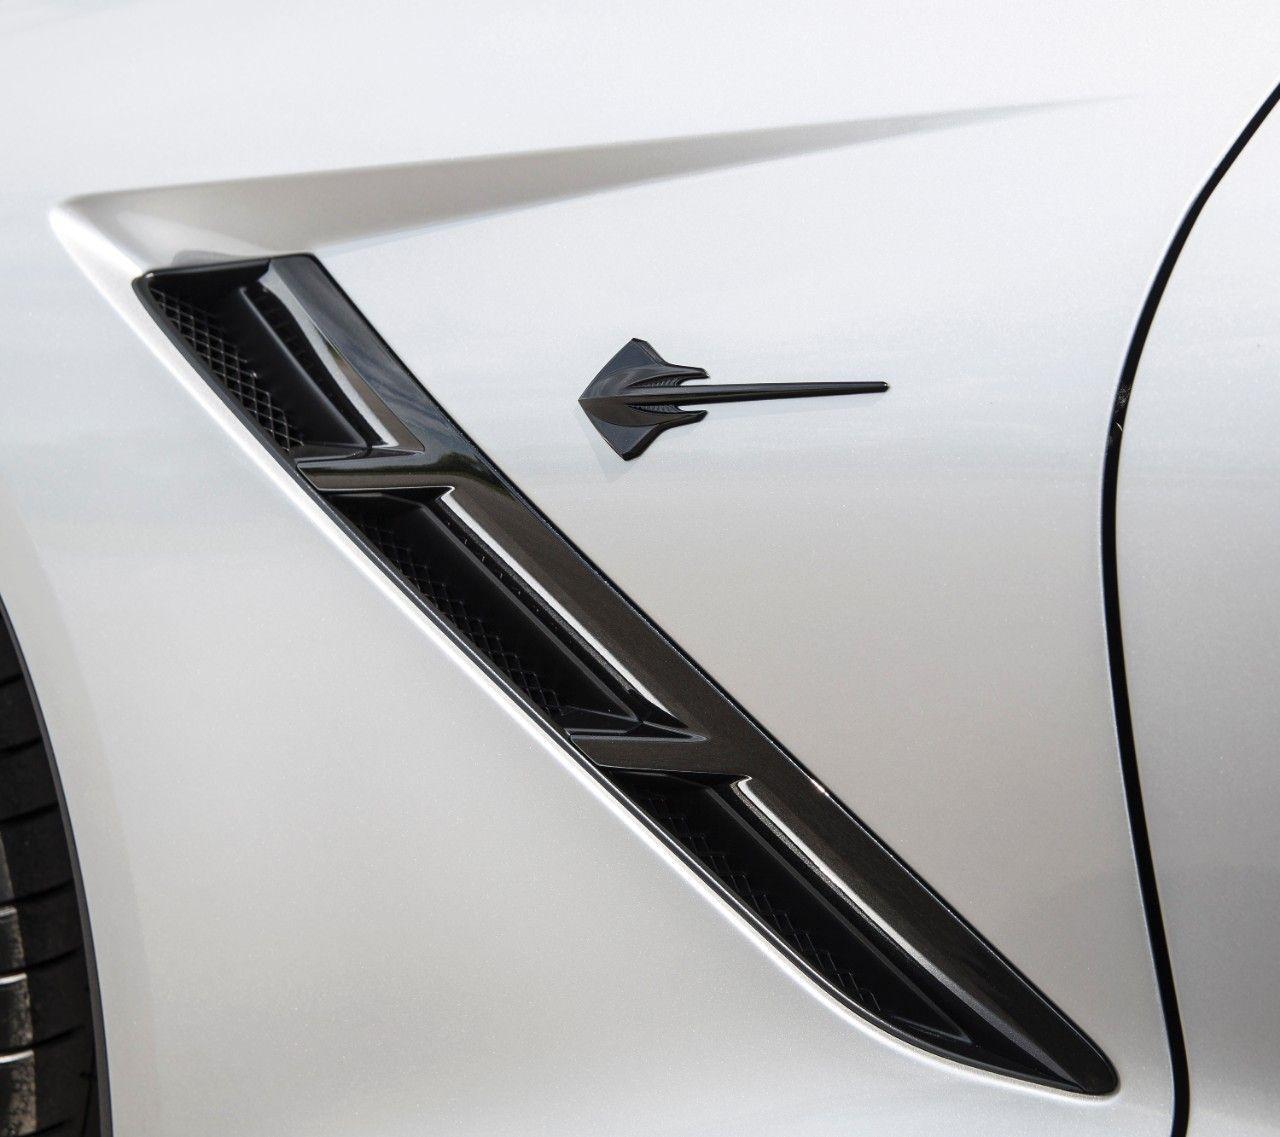 Corvette Stingray Logo - 2016 Corvette Changes And Updates Announced | GM Authority